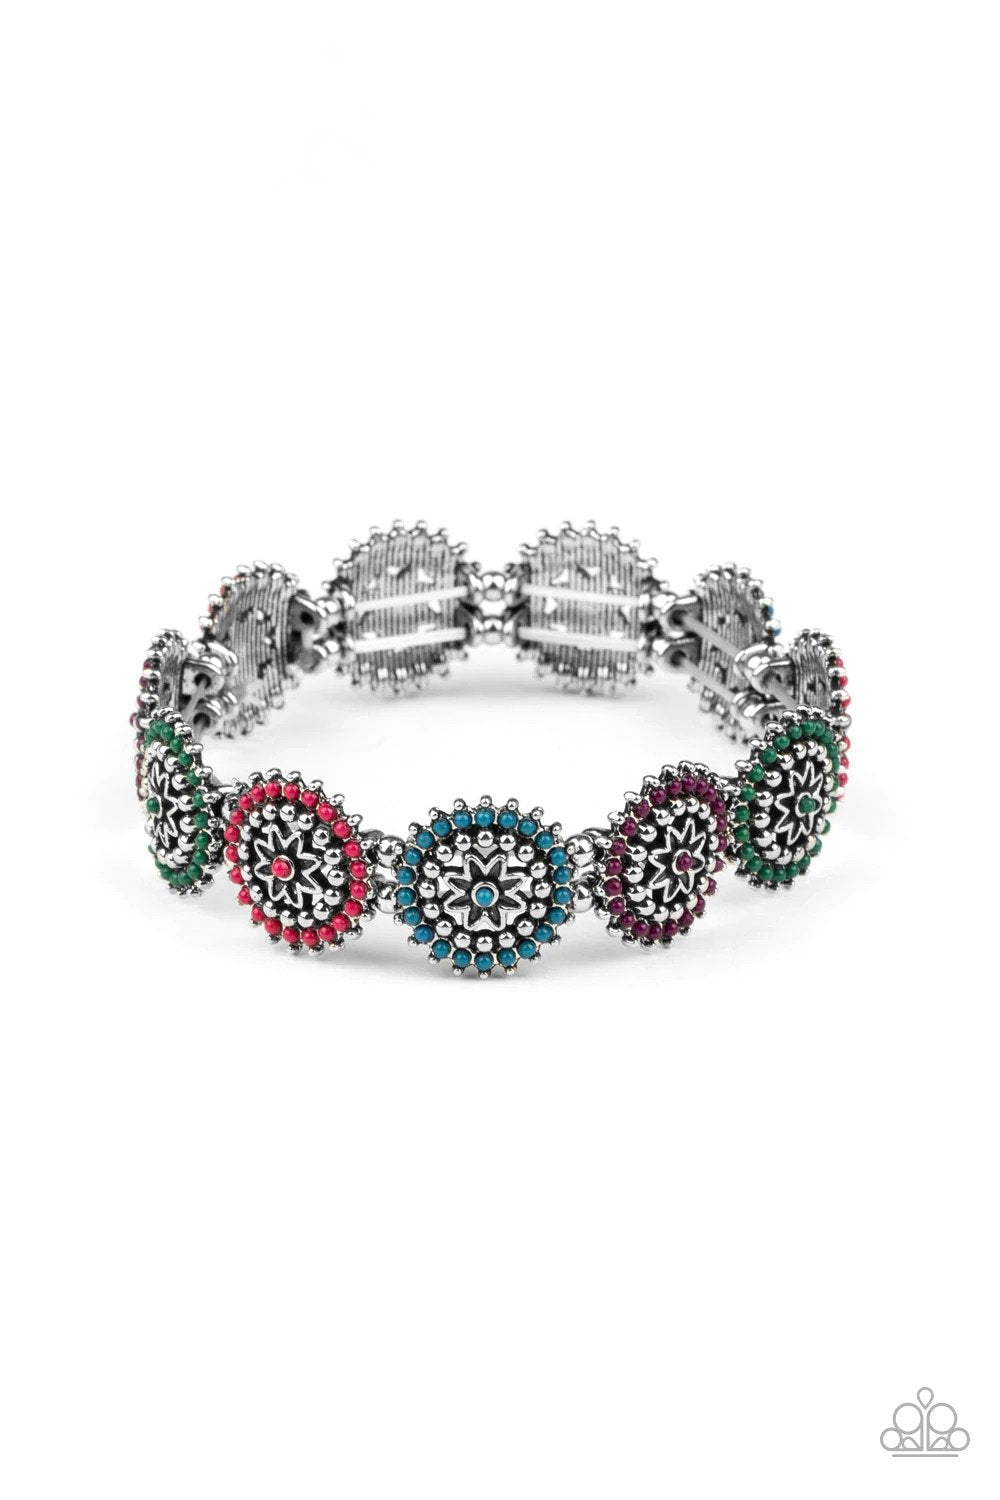 Bohemian Flowerbed Multi Bracelet- lightbox - CarasShop.com - $5 Jewelry by Cara Jewels